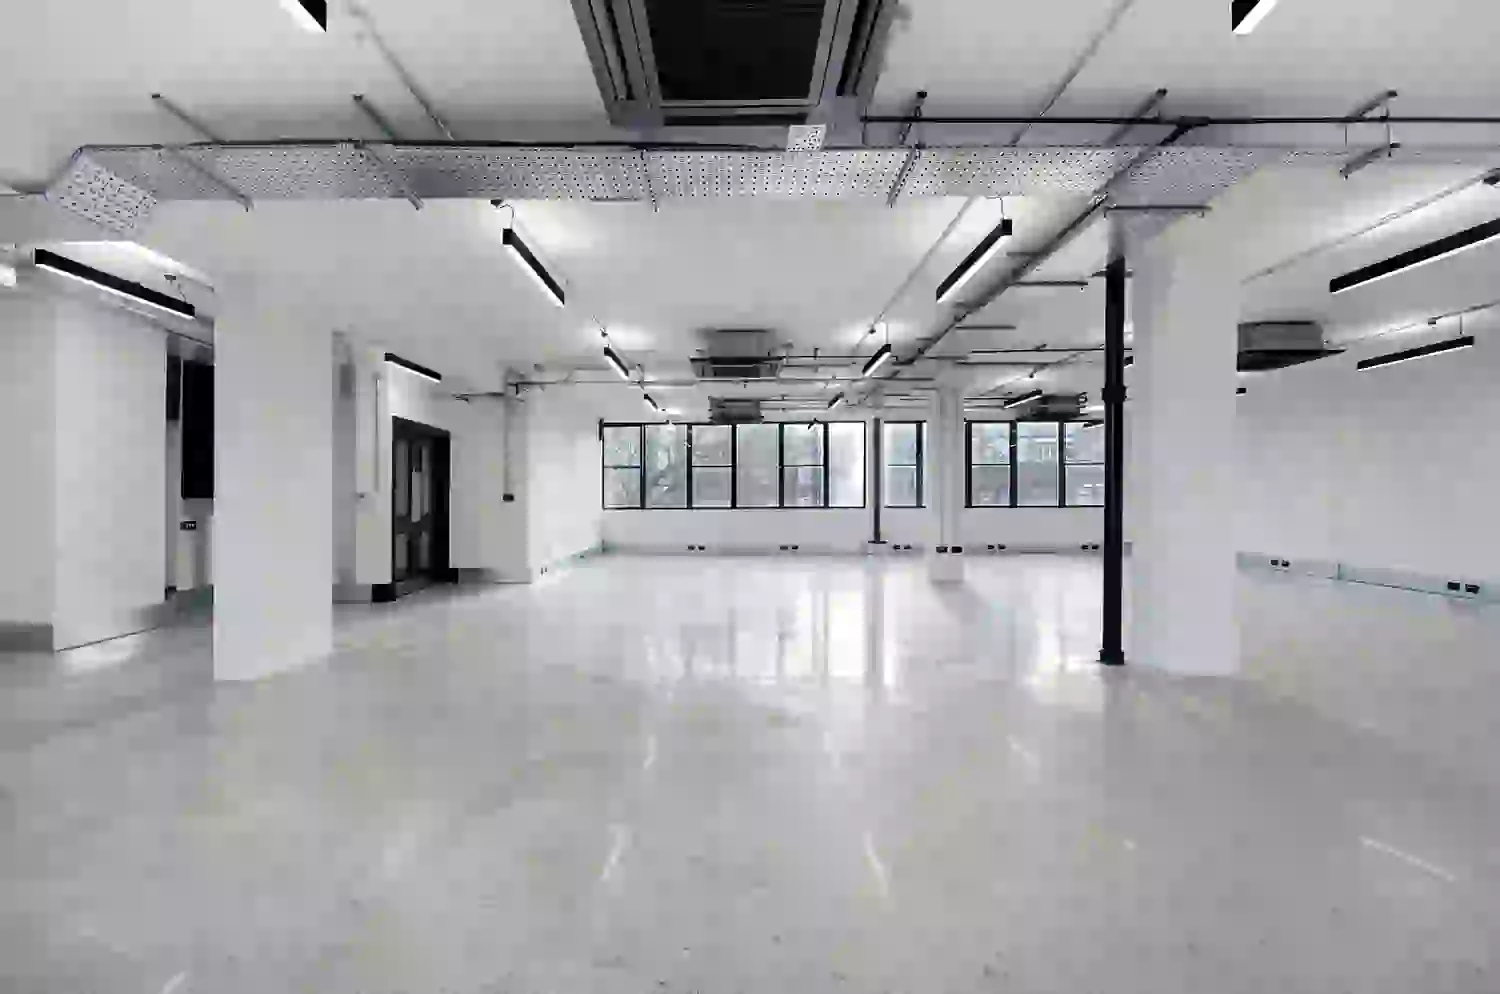 Office space to rent at E1 Studios, 3-15 Whitechapel Road, London, unit NH.207, 2015 sq ft (187 sq m).